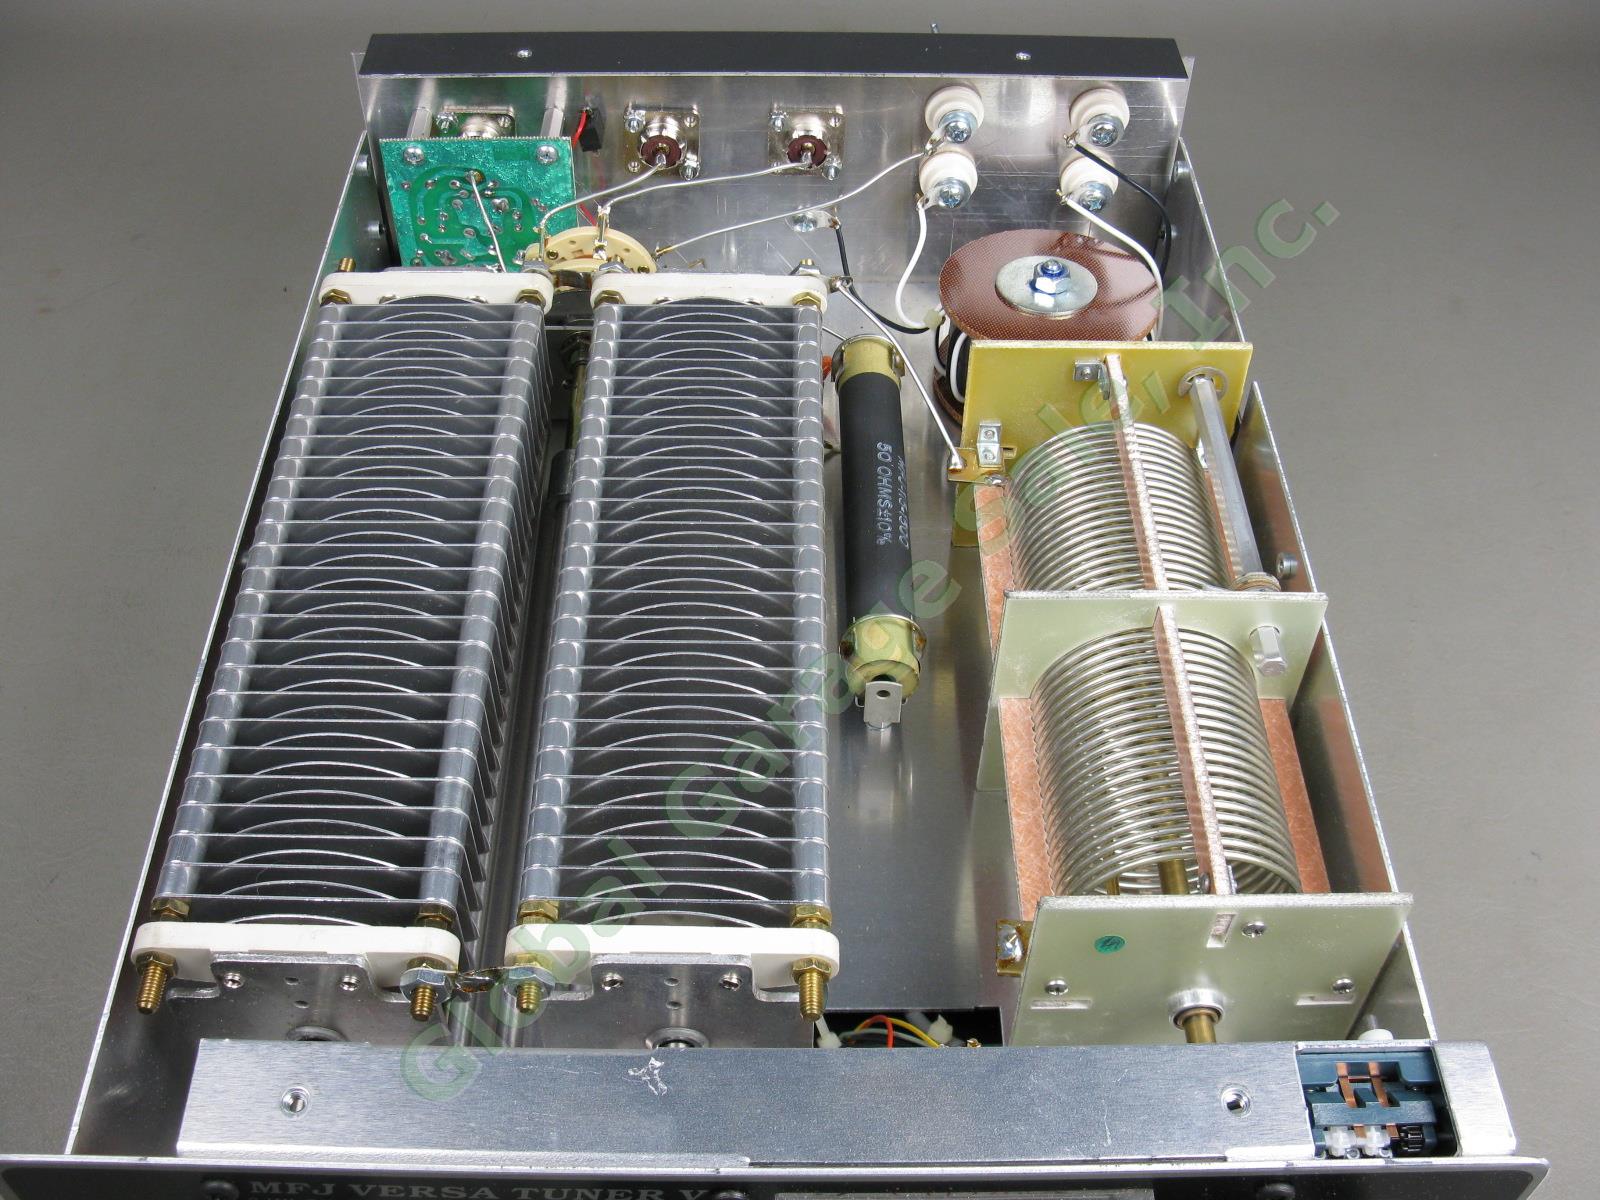 MFJ-989C Versa Ham Radio Antenna Tuner V 3KW Series Roller Inductor Parts/Repair 8